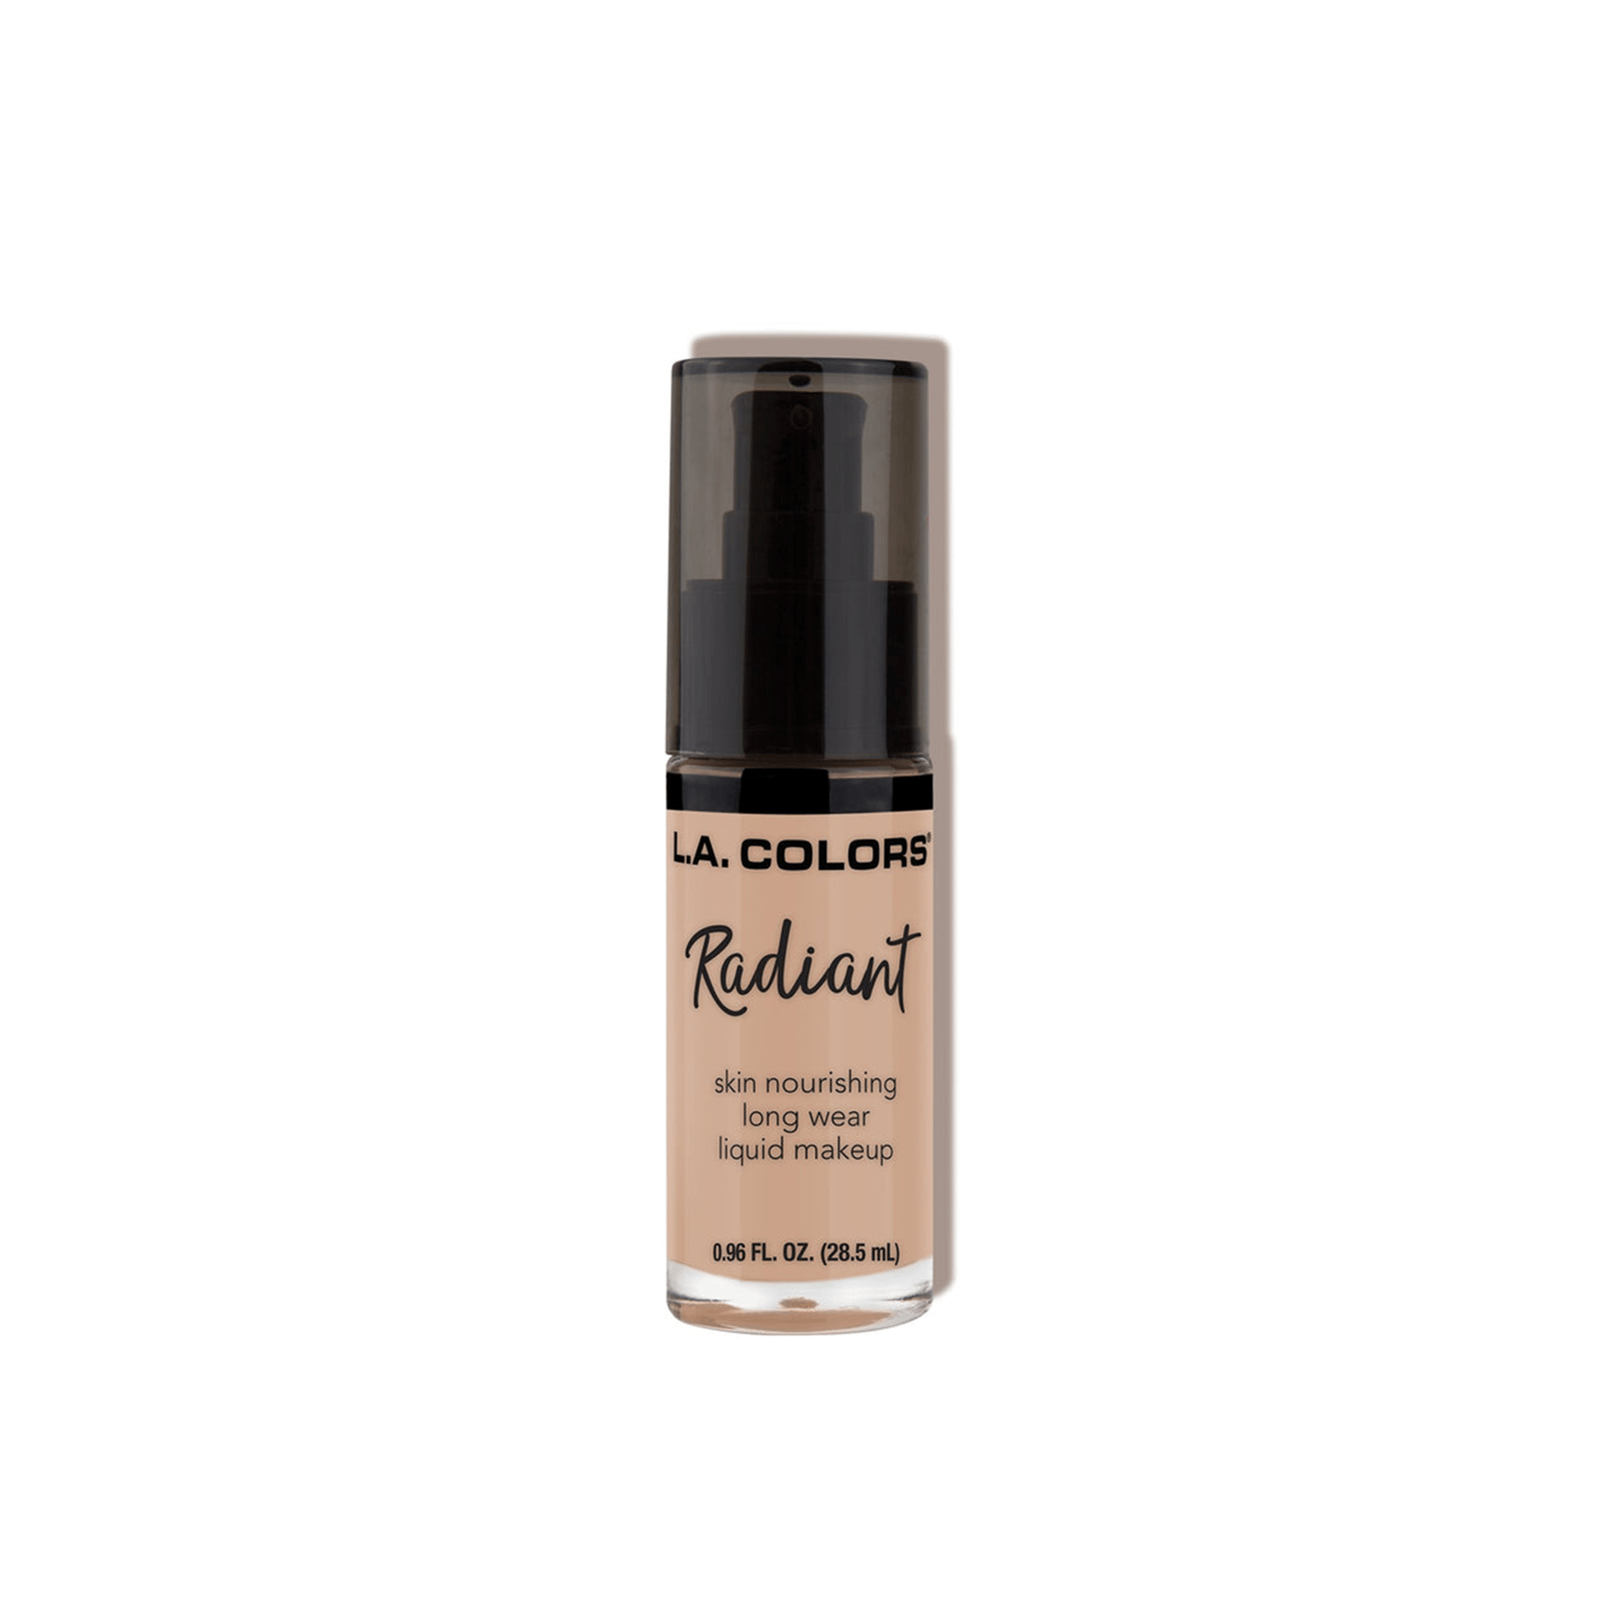 L.A. Colors Radiant Liquid Makeup Foundation CLM388 Beige 28.5ml